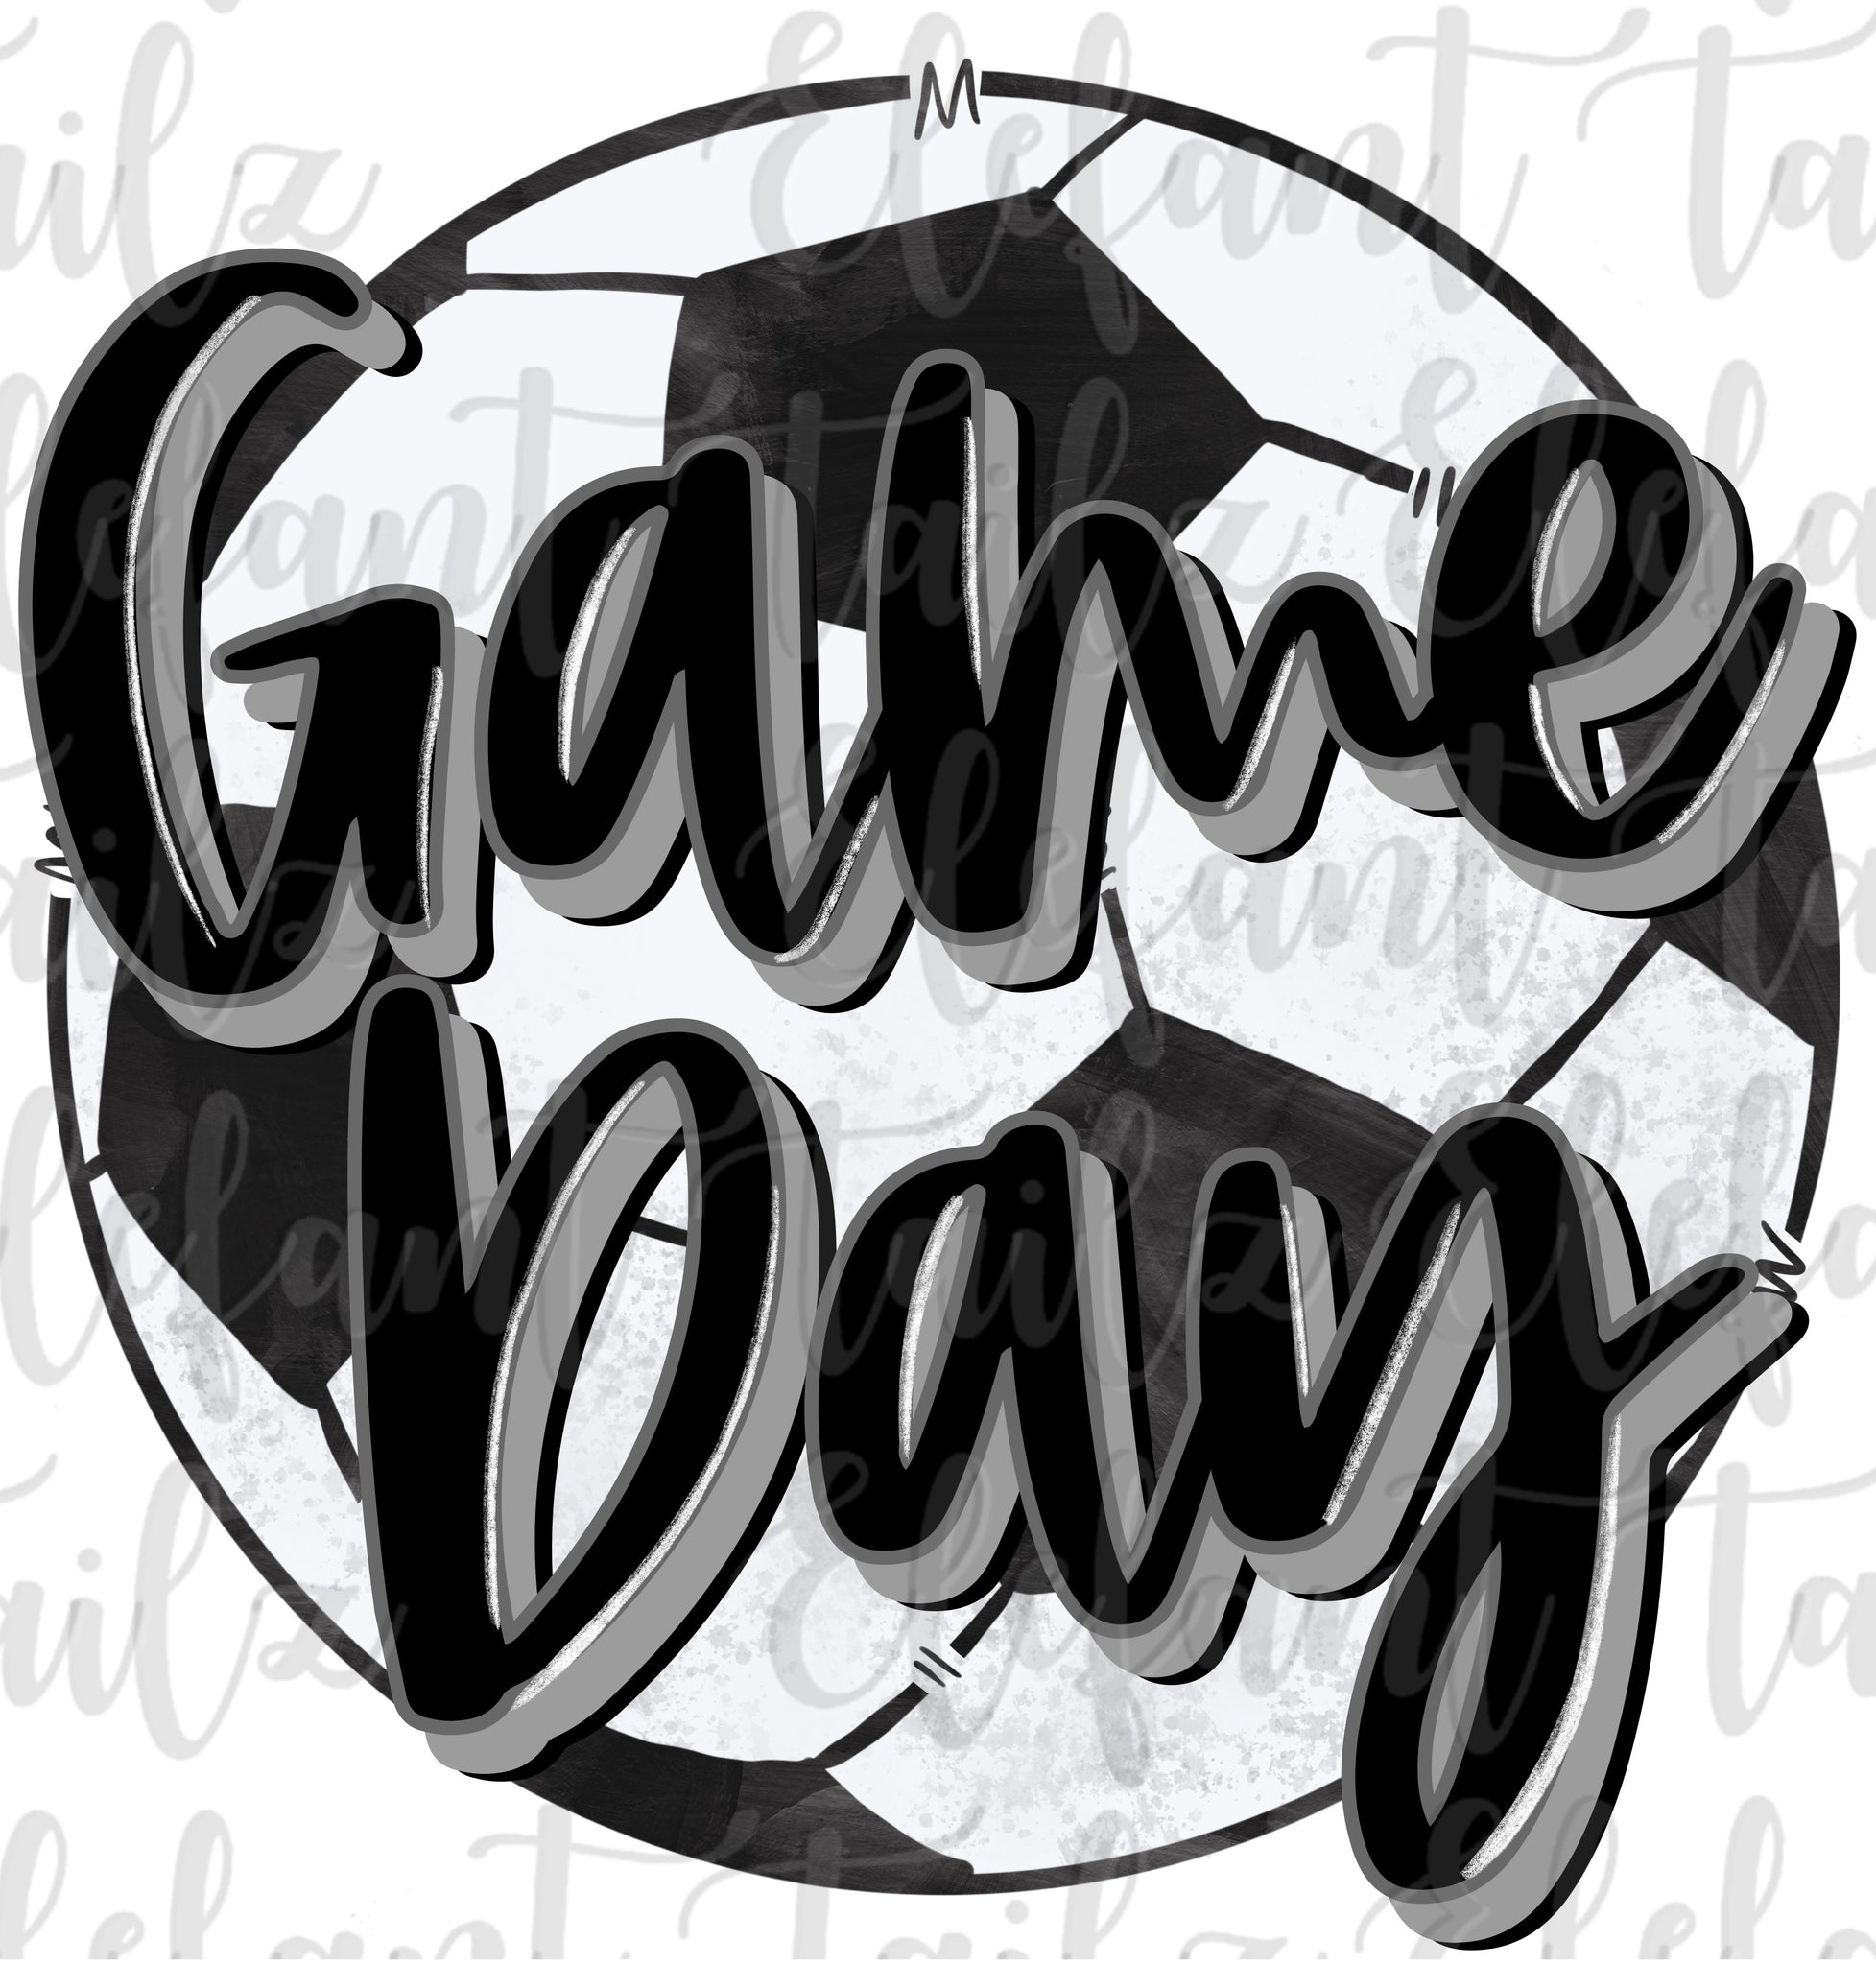 Game Day Soccer